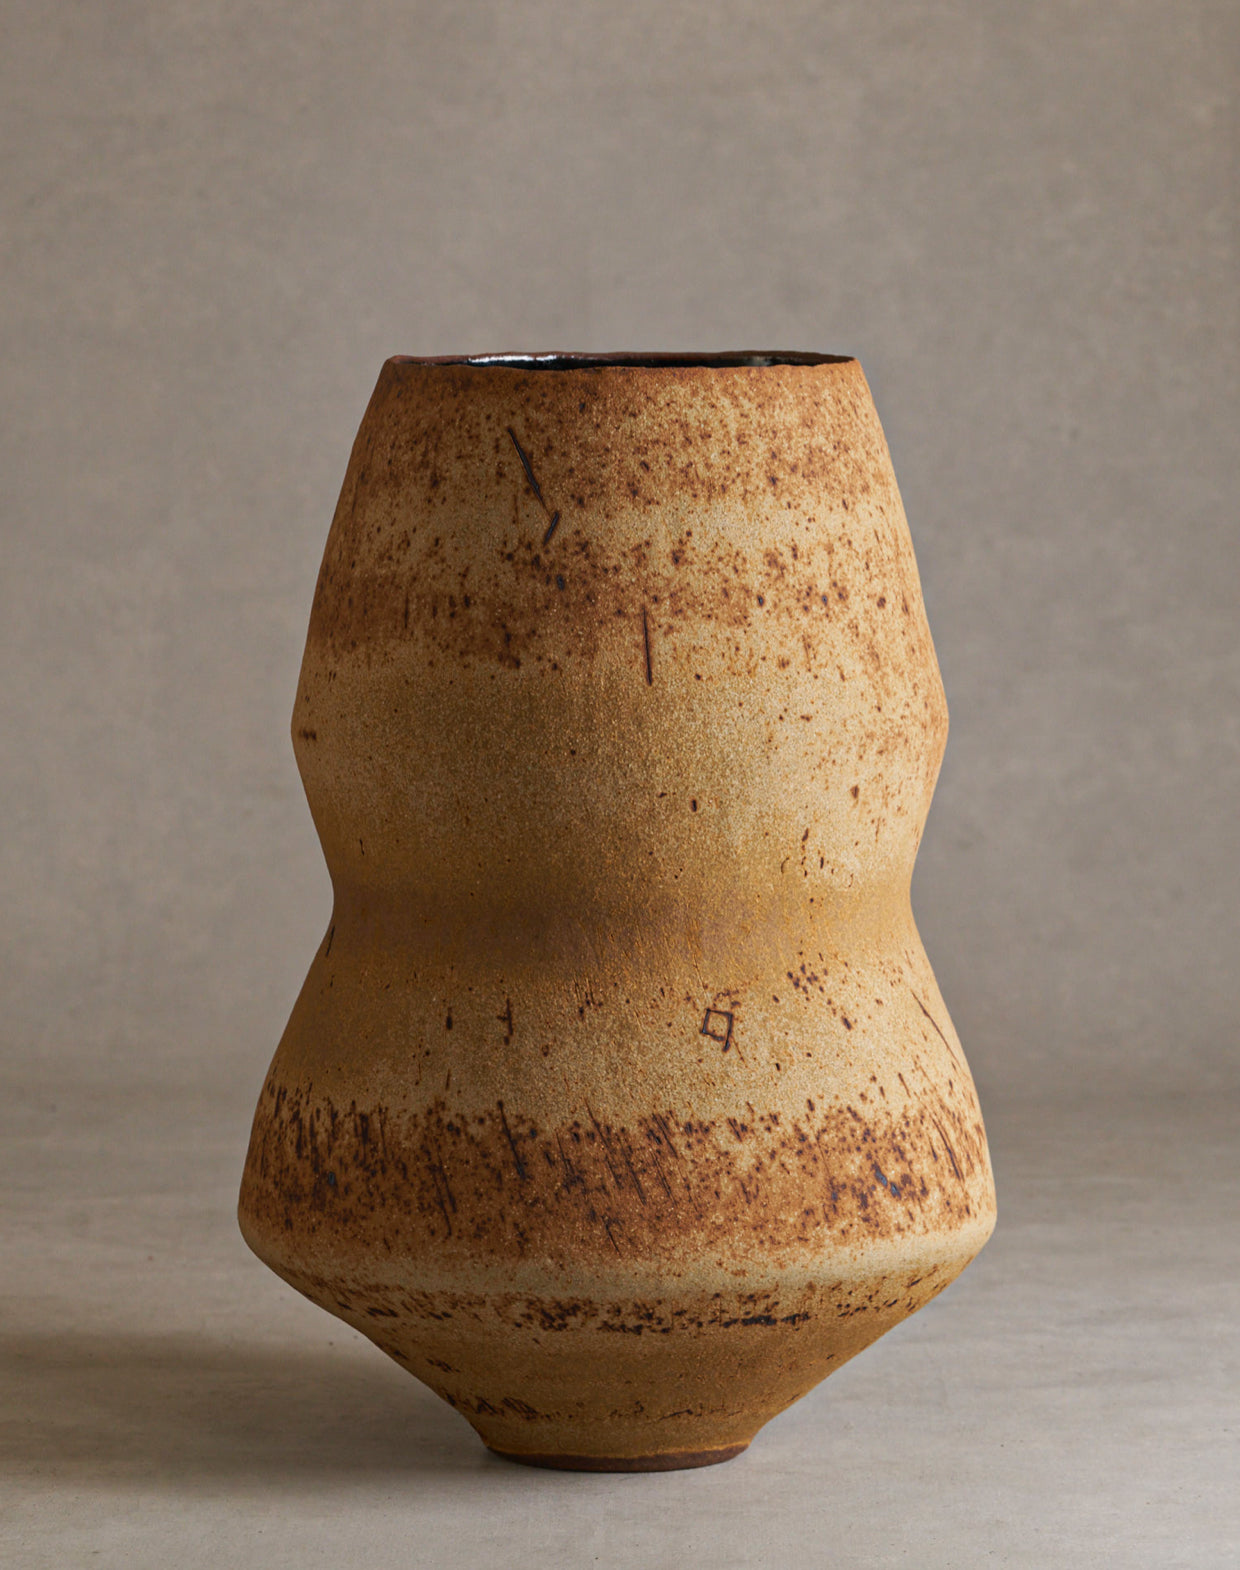 Rick Hintze Coiled Stoneware Vessel, "Untitled" No. 10